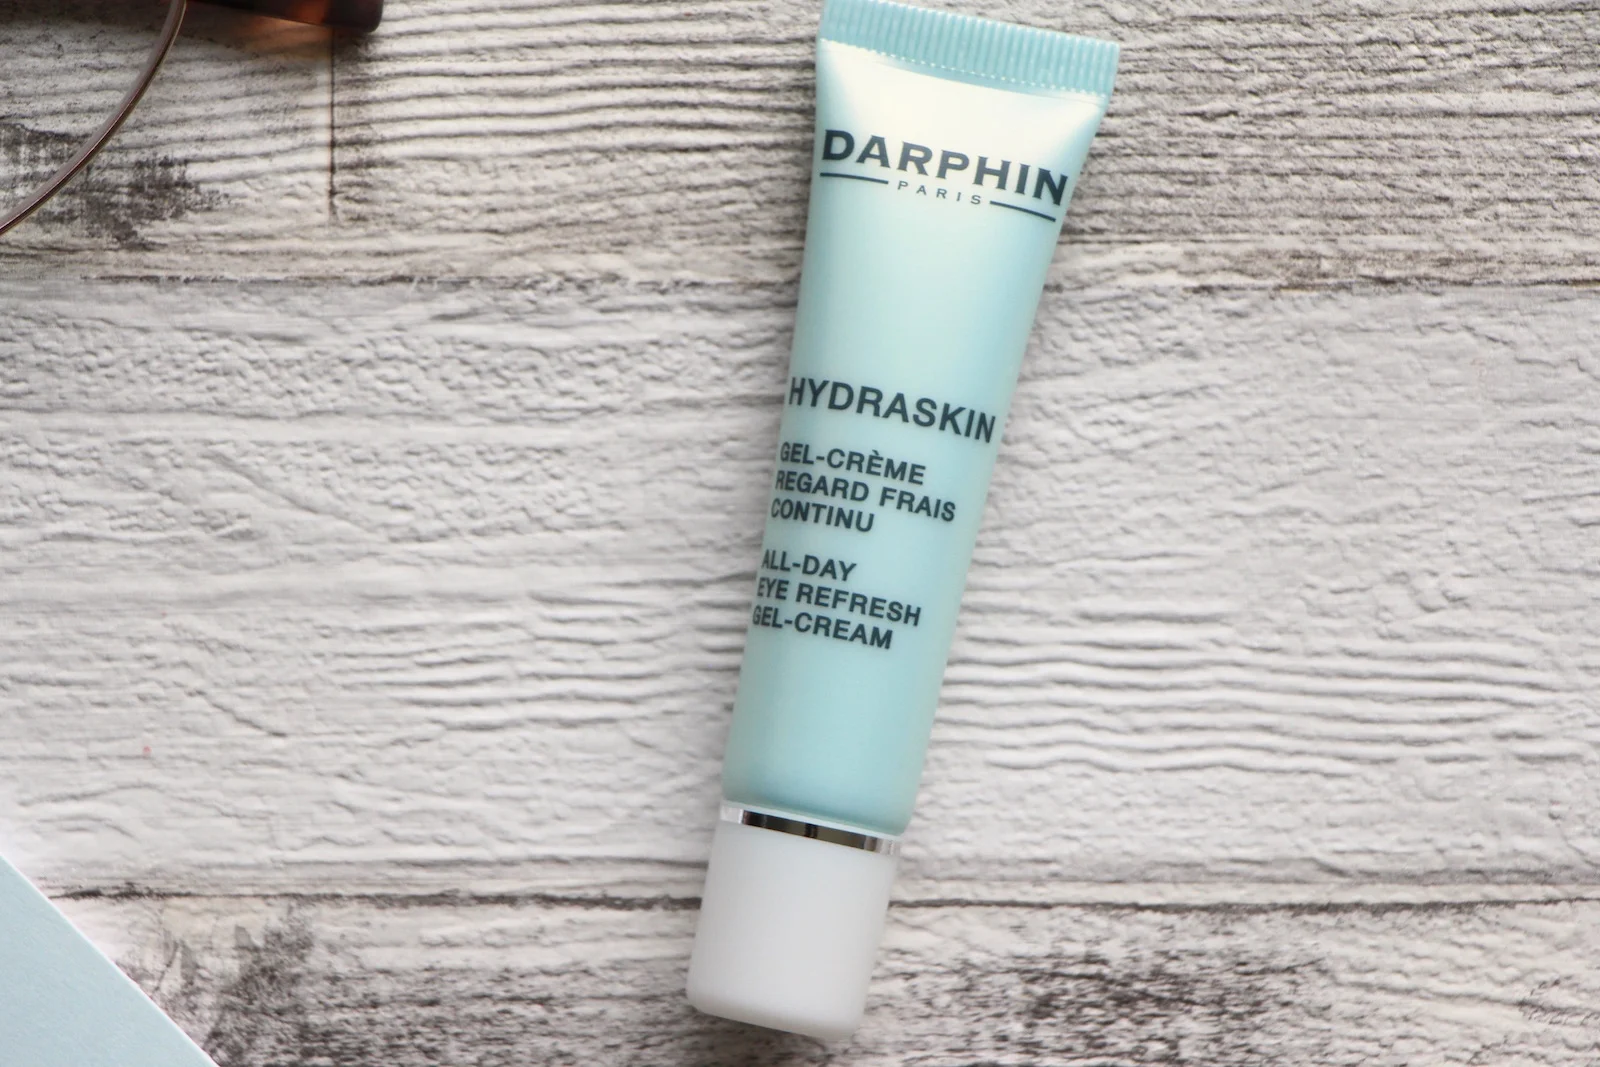 darphin hydraskin all day eye refresh gel cream review